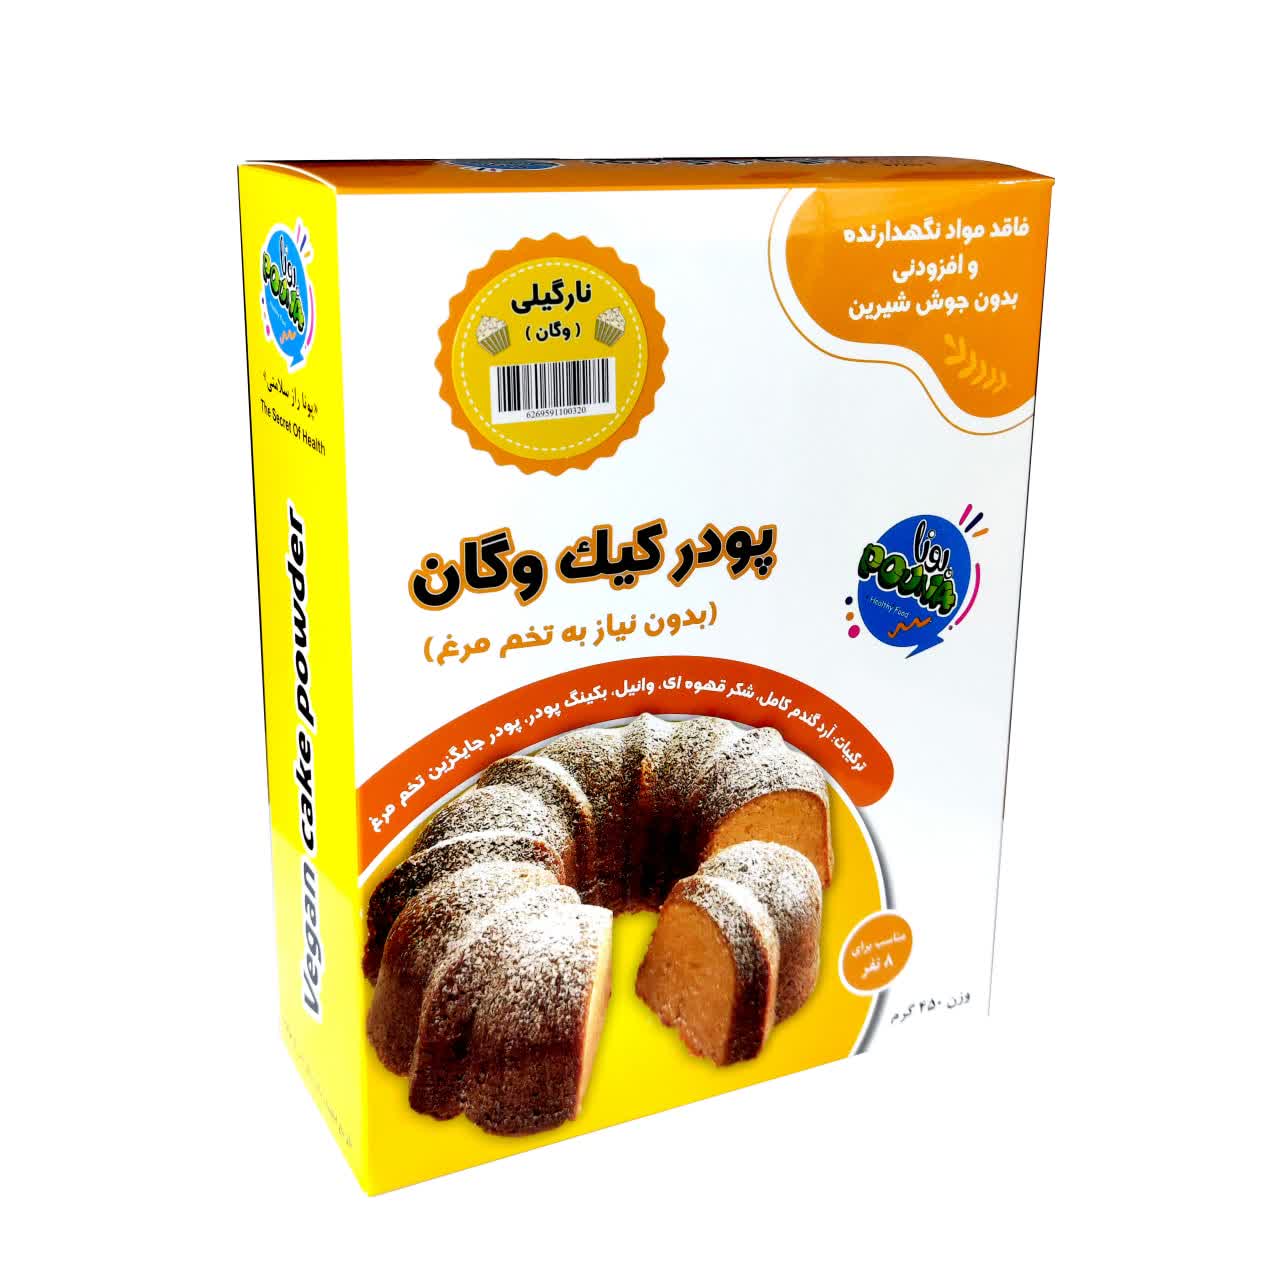 پودر کیک نارگیلی وگان پونا - 450 گرم